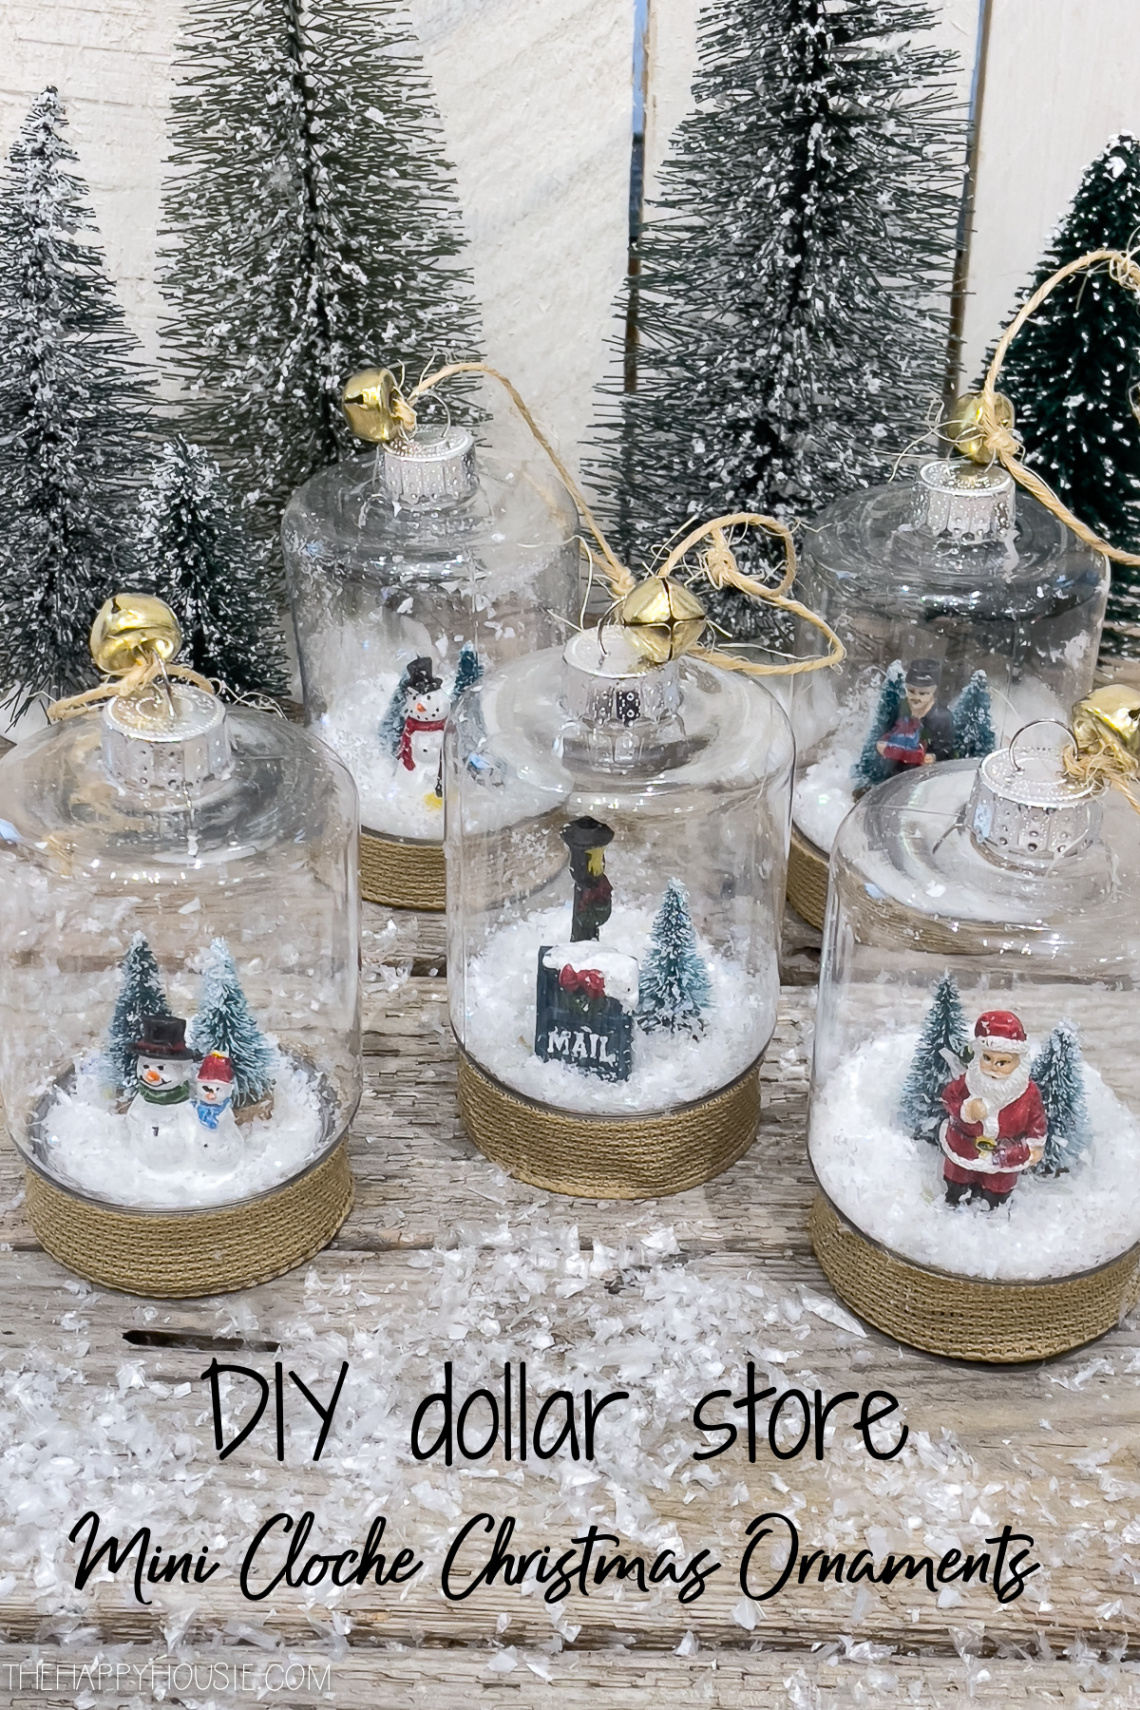 DIY Dollar Store Crafts: Mini Cloche Christmas Ornaments  The